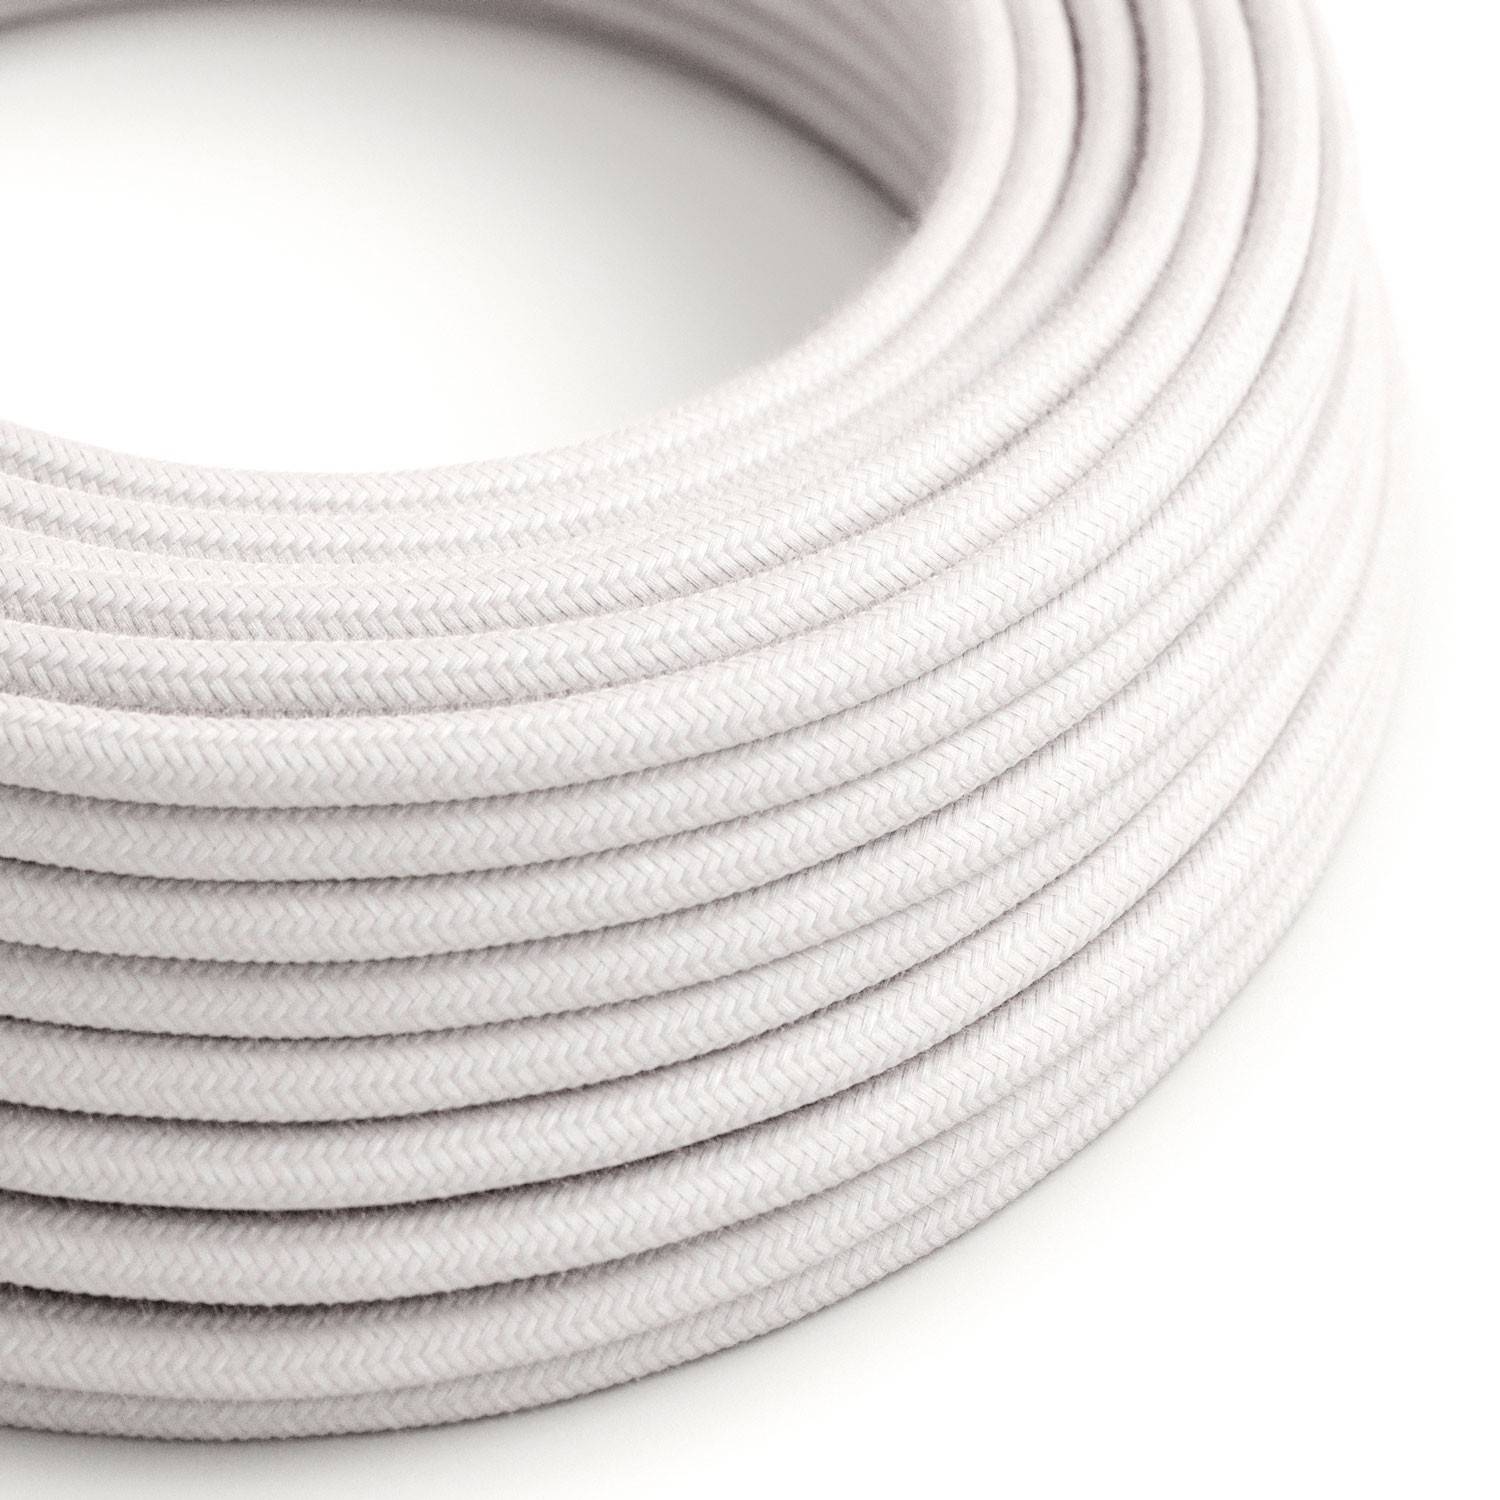 Cotton Pale Pink Textile Cable - The Original Creative-Cables - RC16 round 2x0.75mm / 3x0.75mm